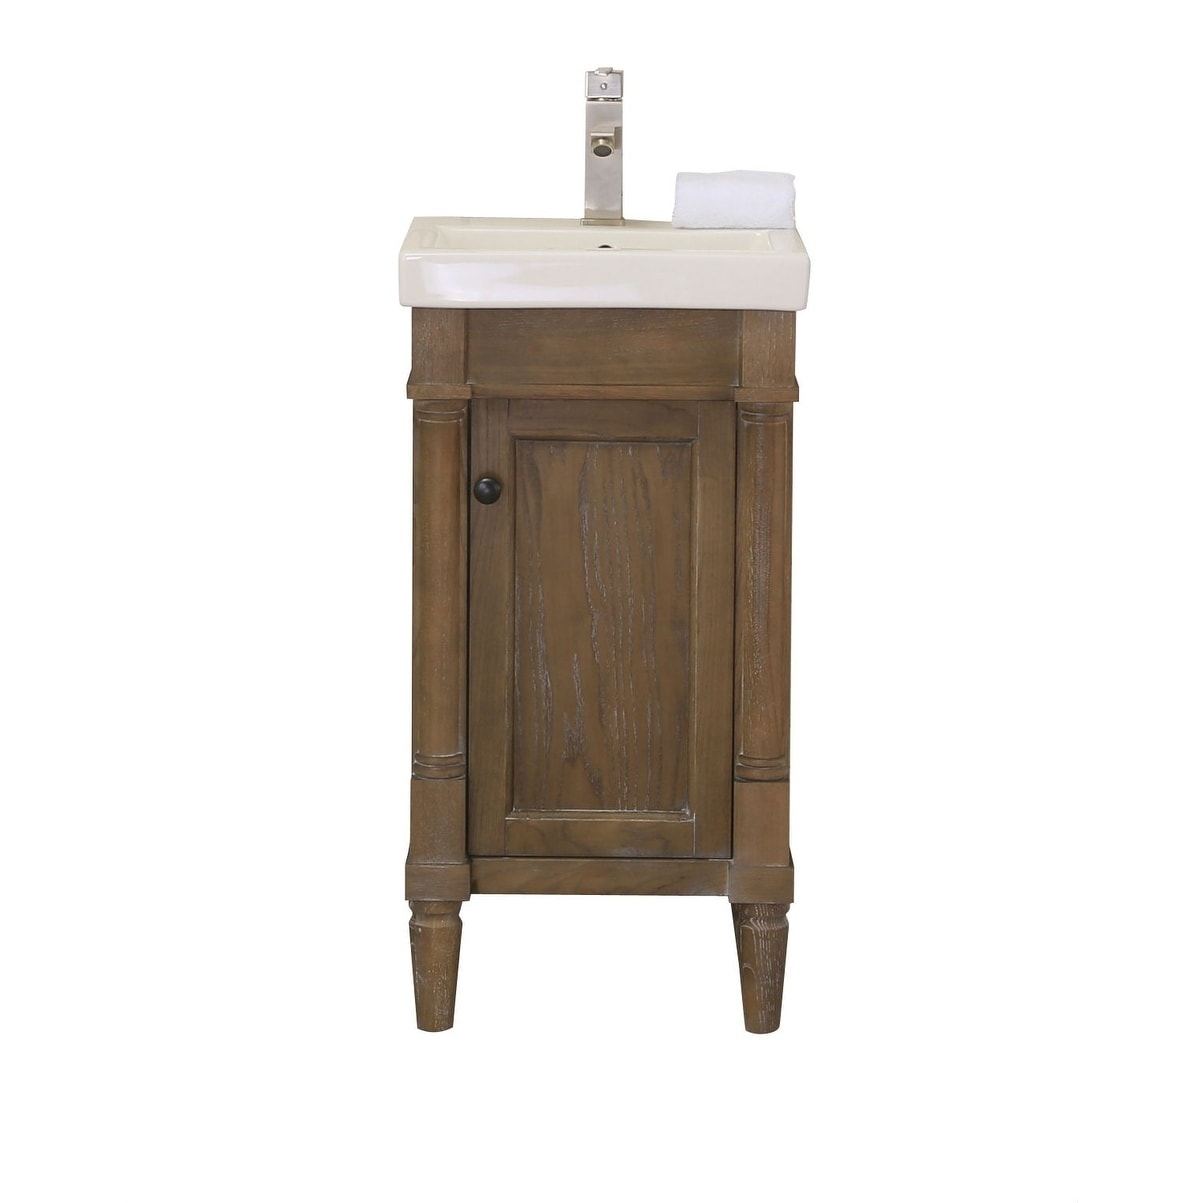 Legion Furniture17 In Bathroom Vanity In Weathered Brown With Porcelain Top Overstock 20599987